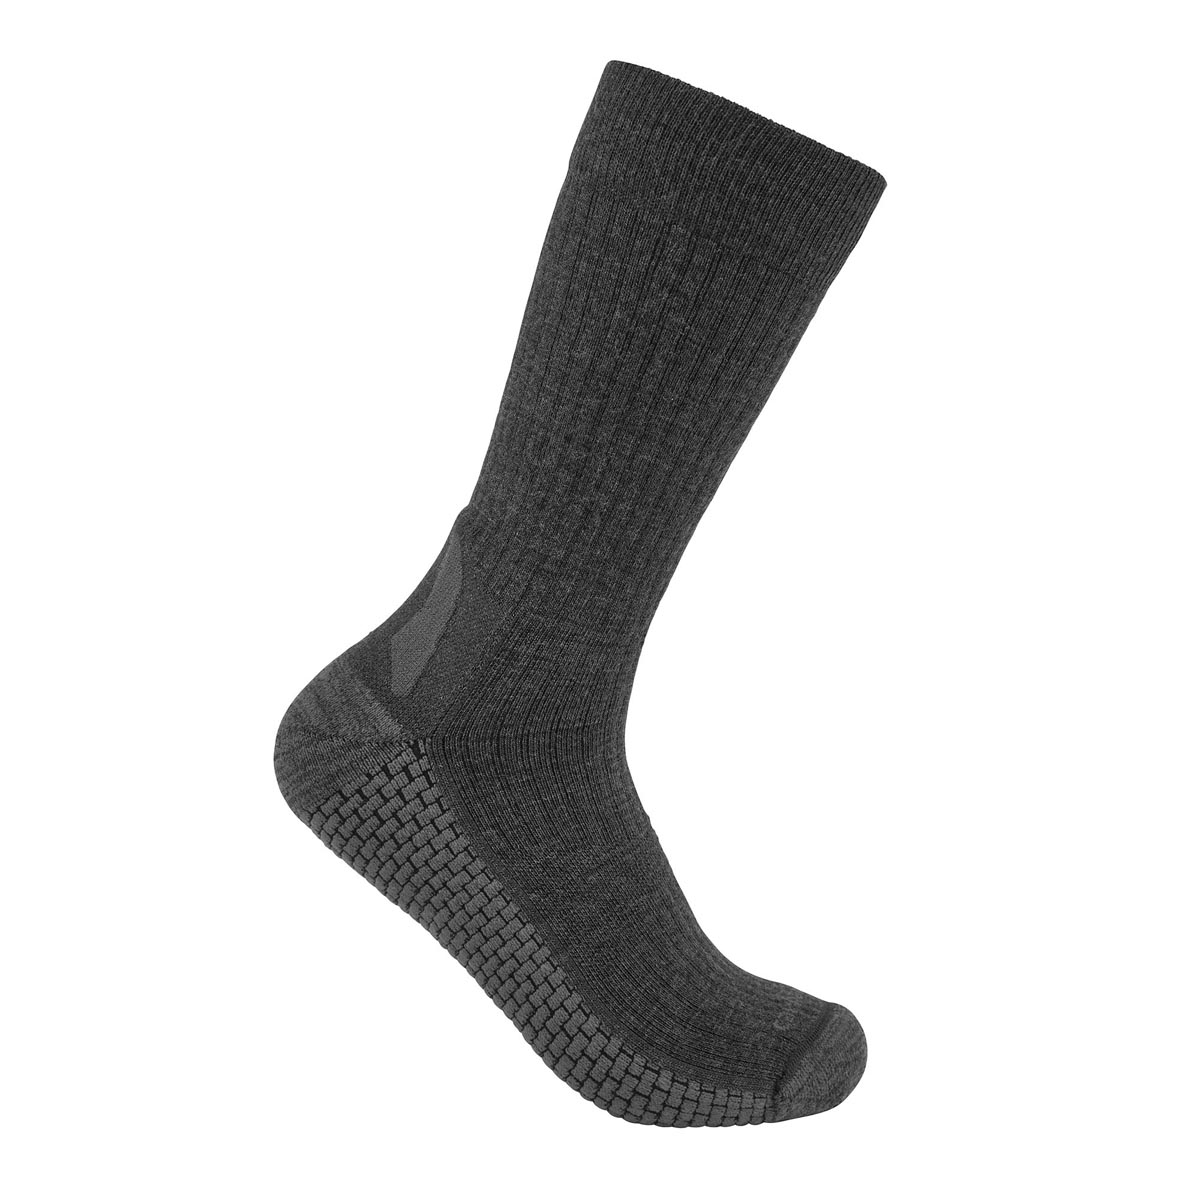 Carhartt Men's Force Grid Midweight Synthetic Merino Wool Blend Crew Sock